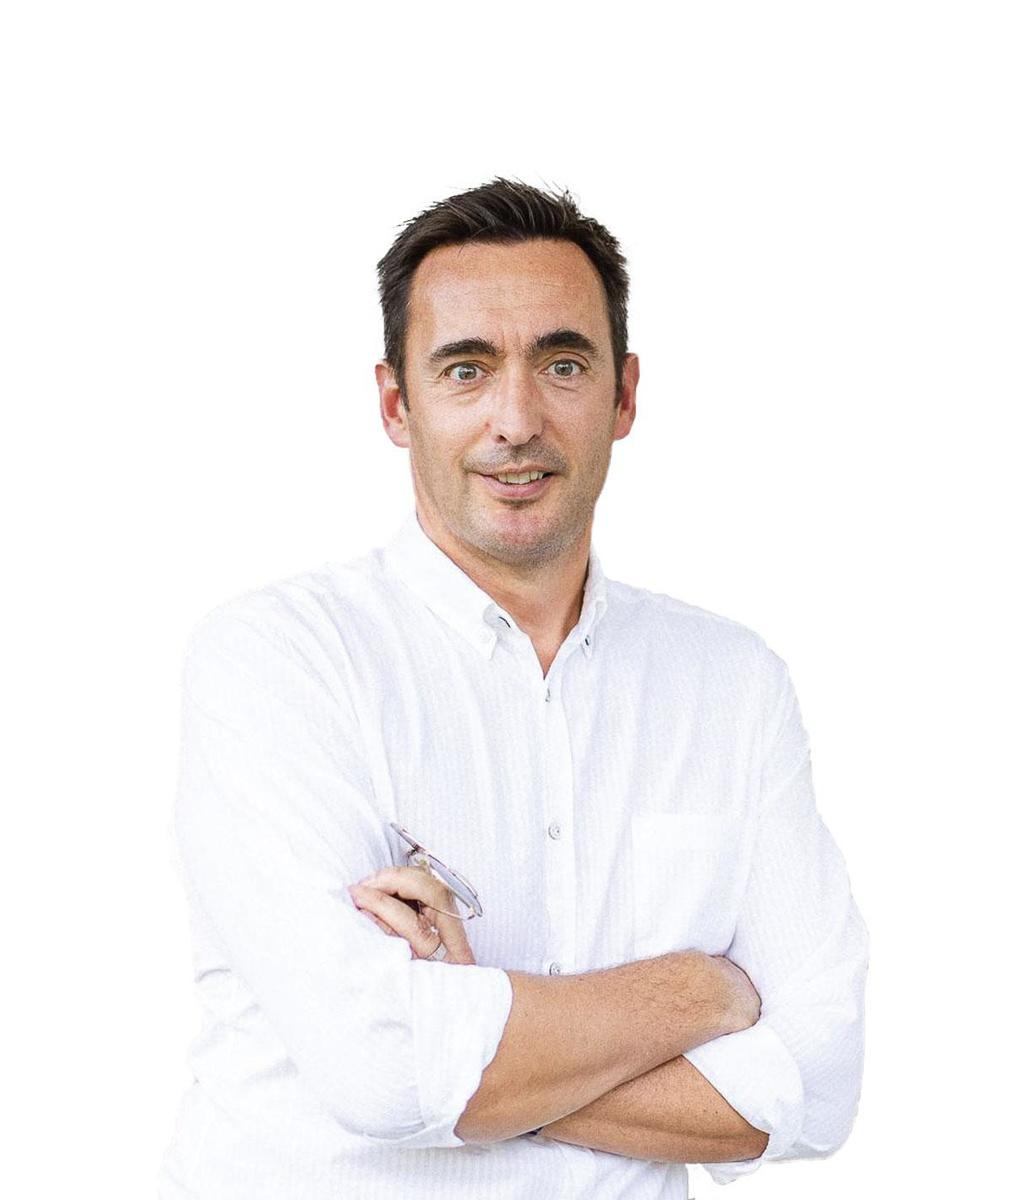 Stefan Dierckx, CEO d'Exellys